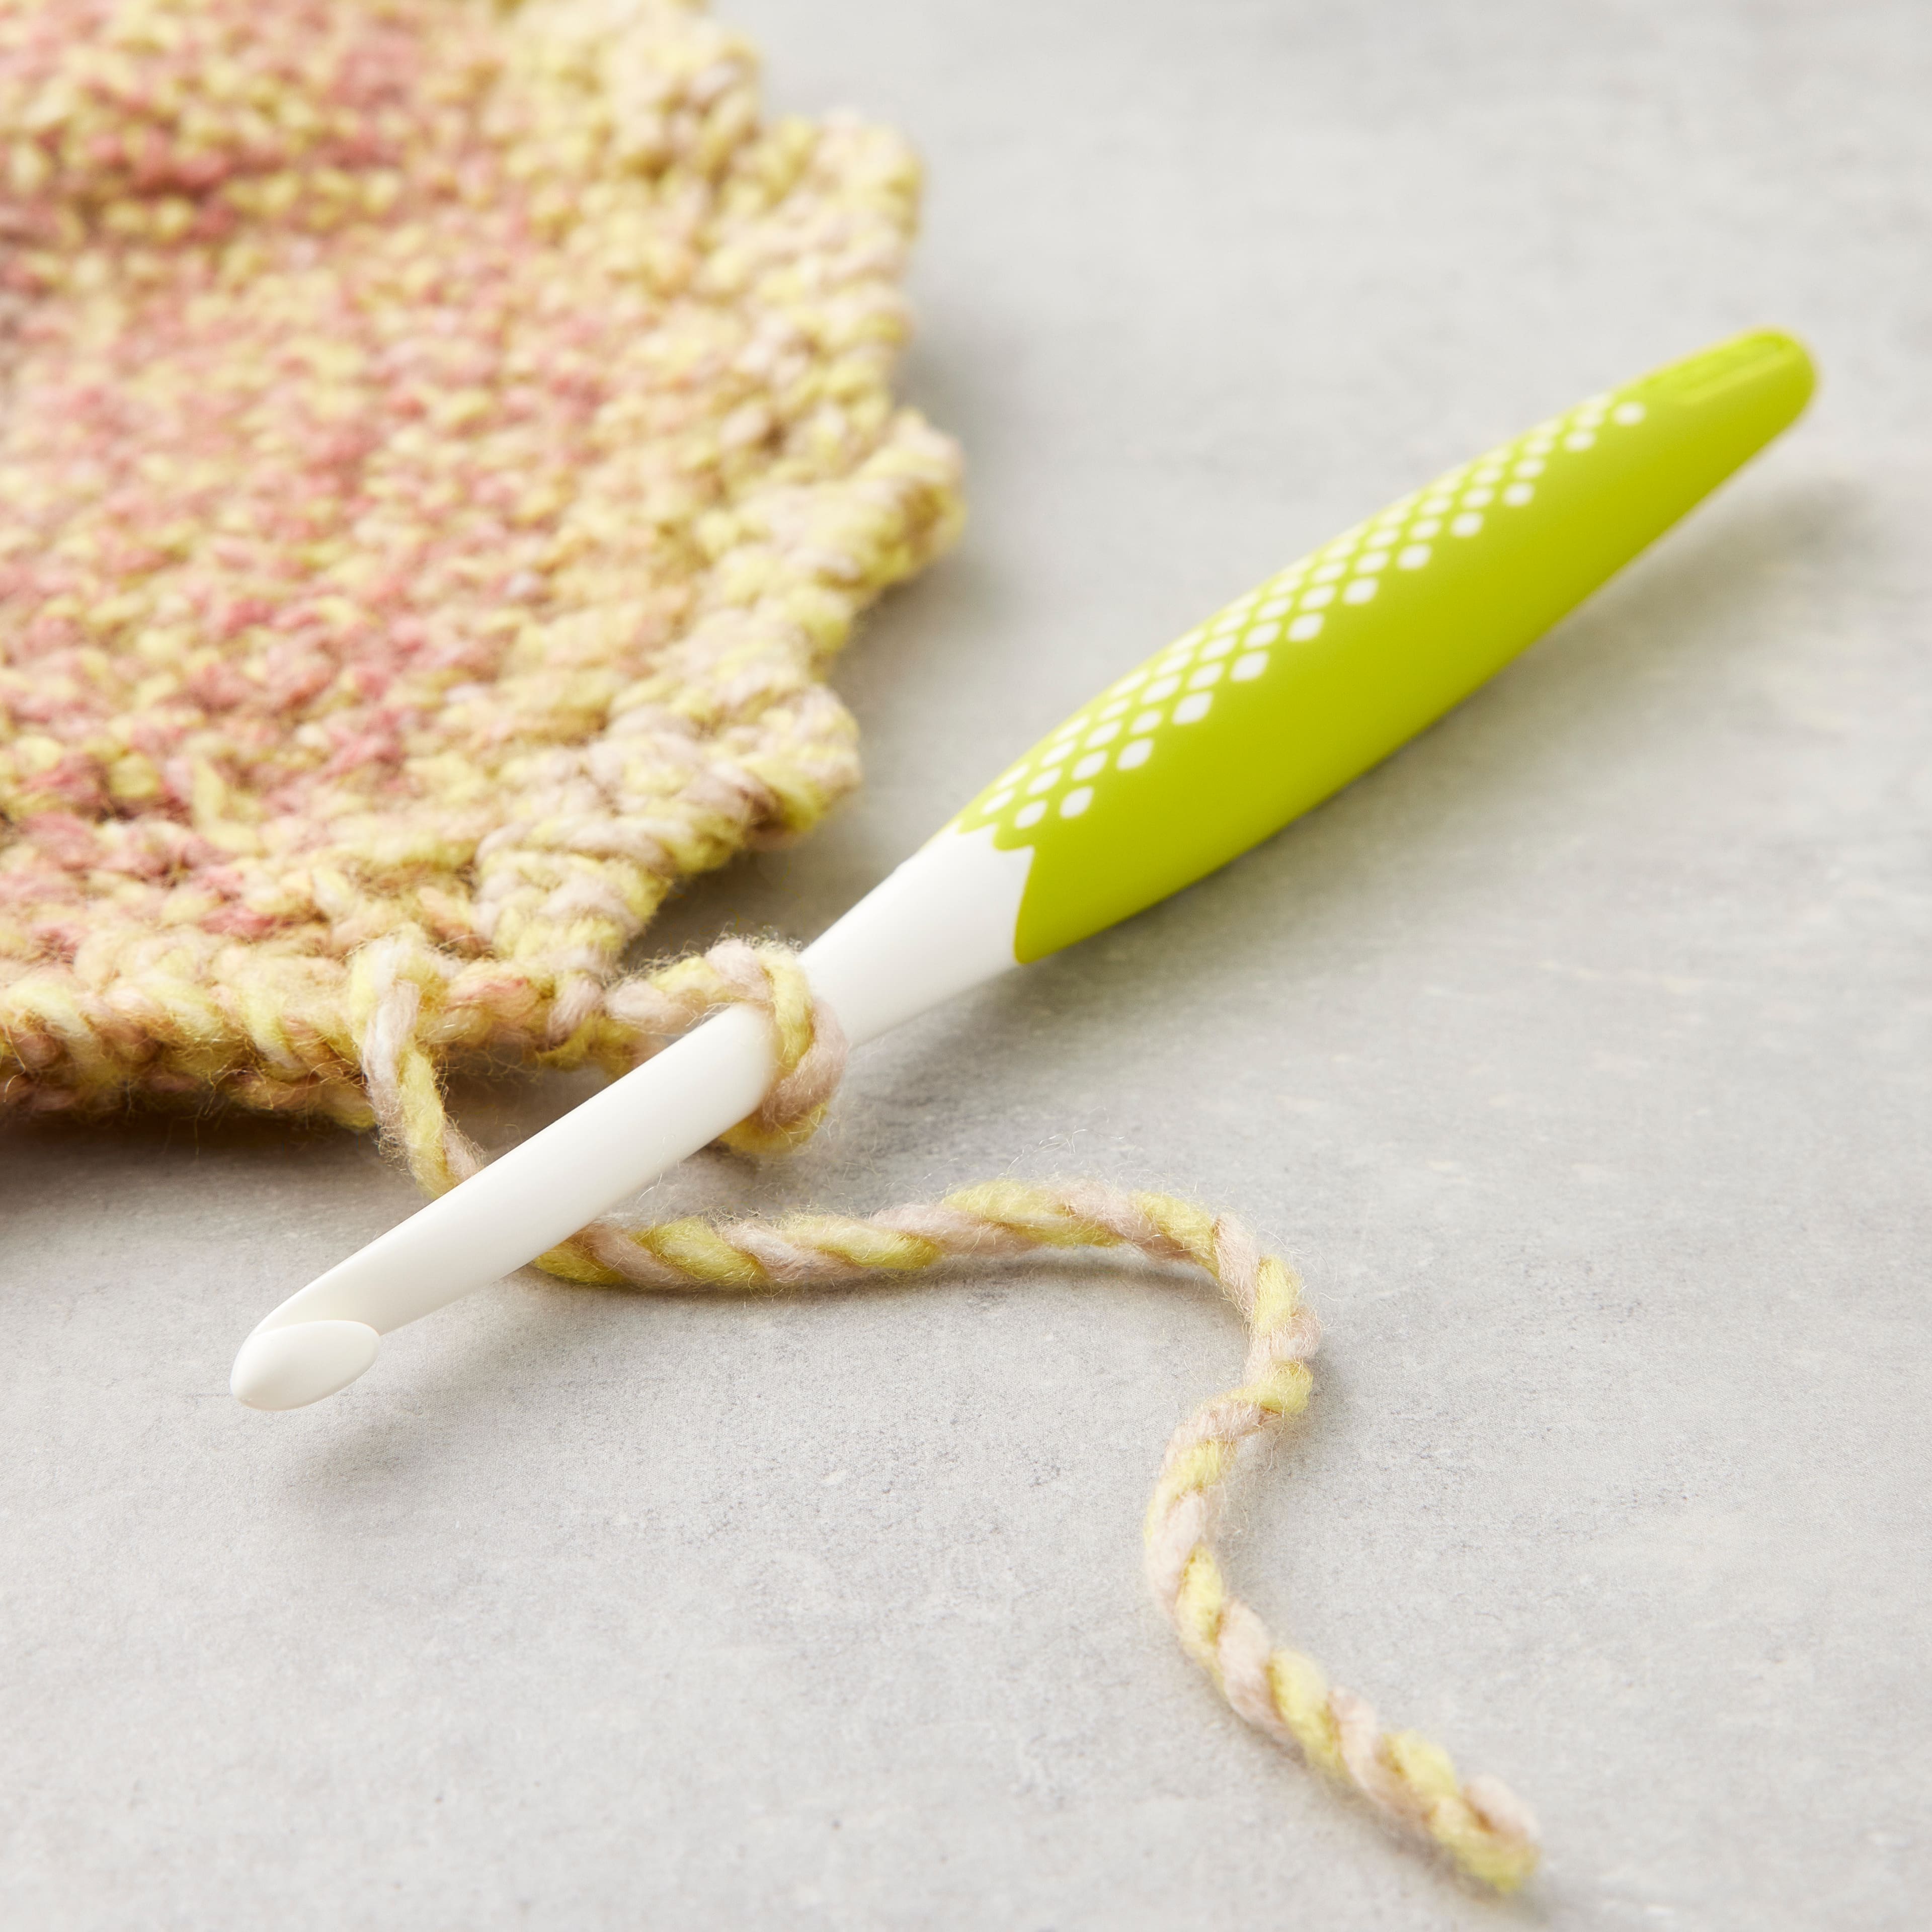 Buy Prym Pop Crochet Hook Set, 5-10mm Crochet Hooks Online at Best